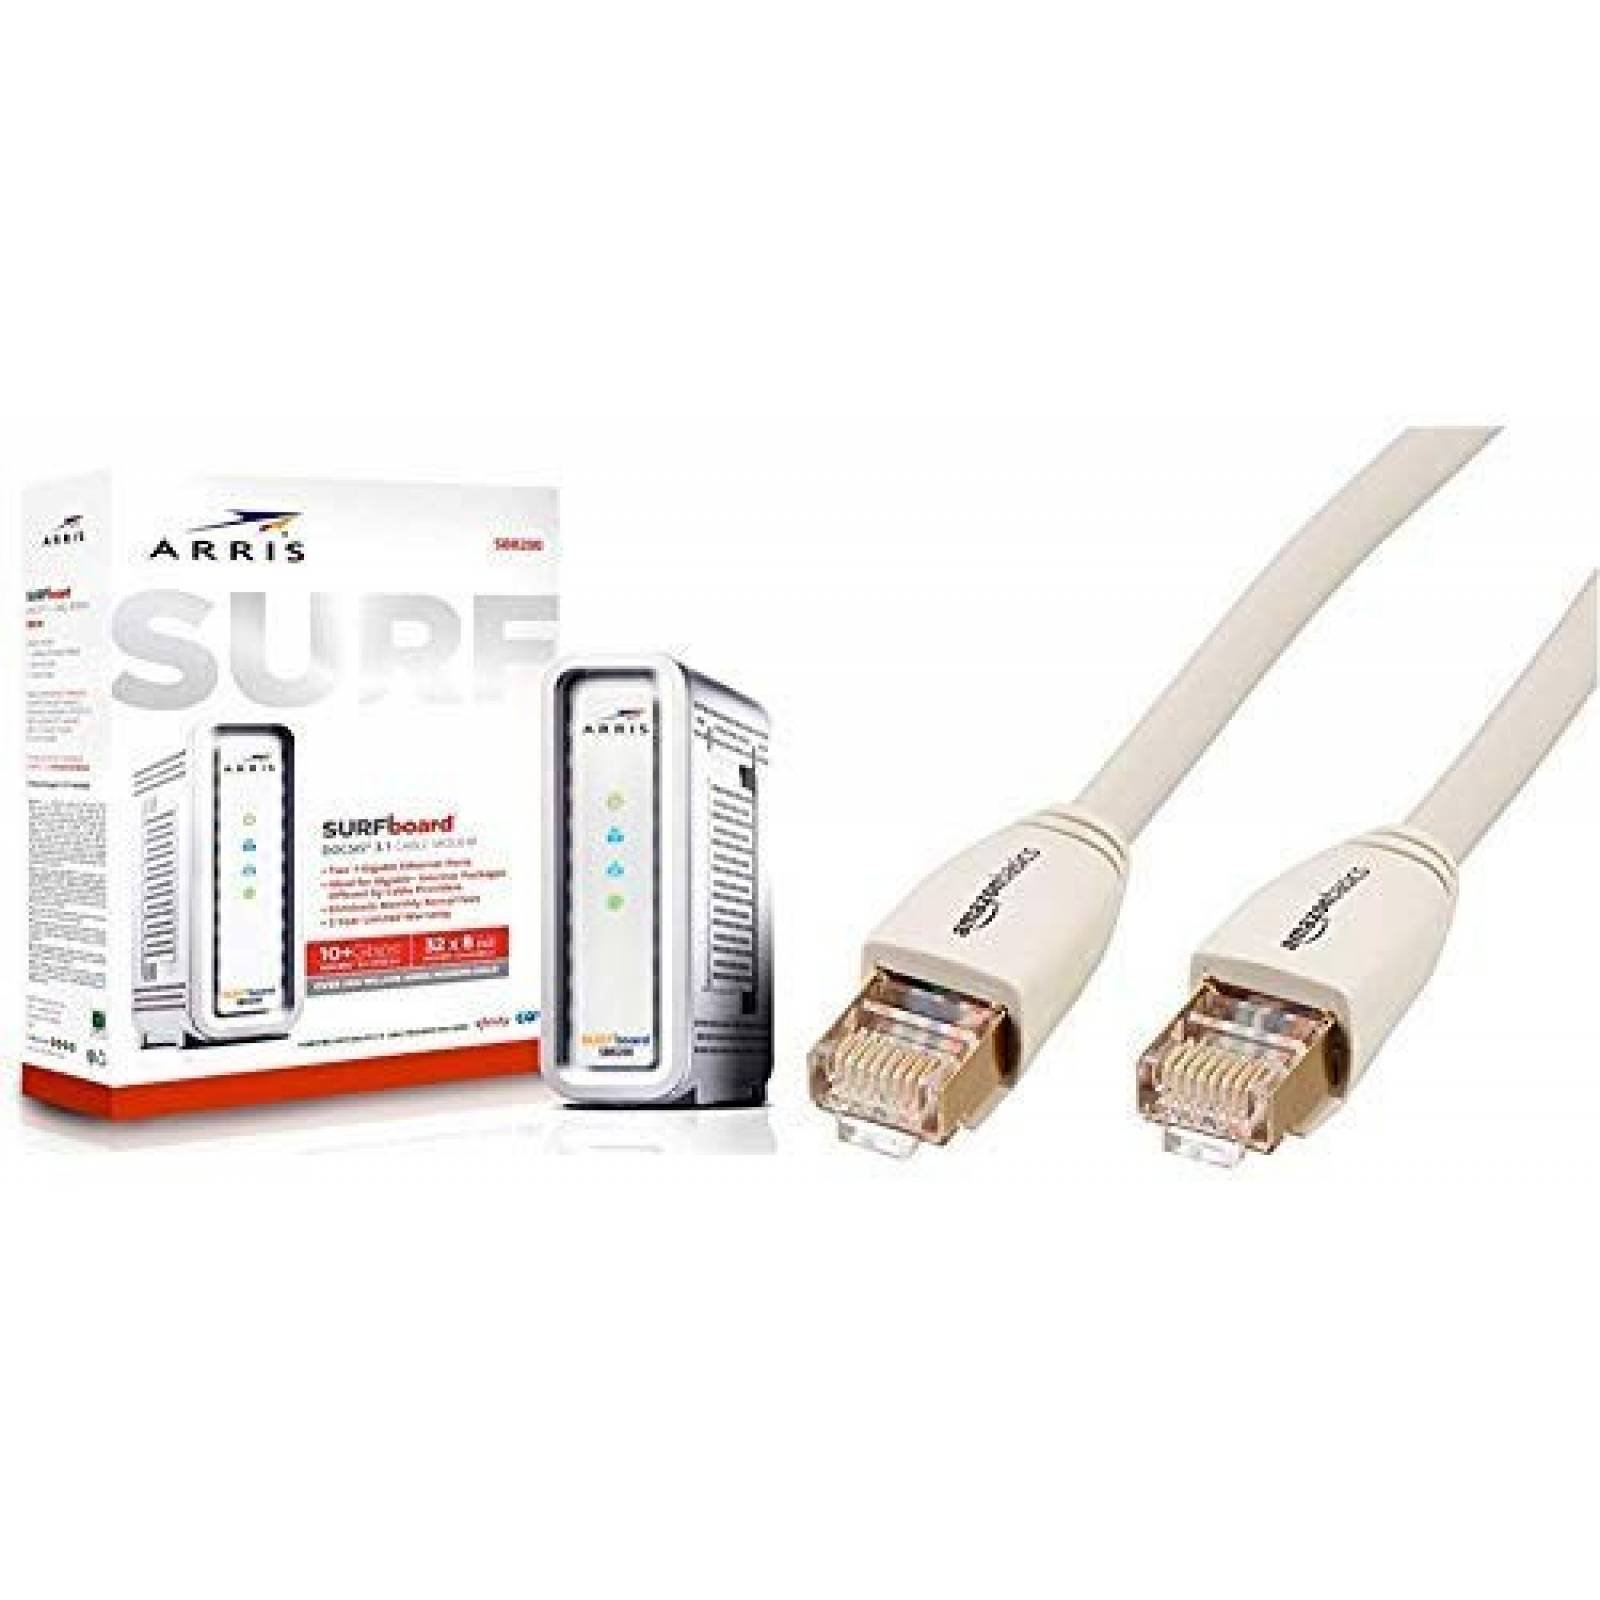 Modem por cable ARRIS Surfboard y cable Ethernet -Blanco